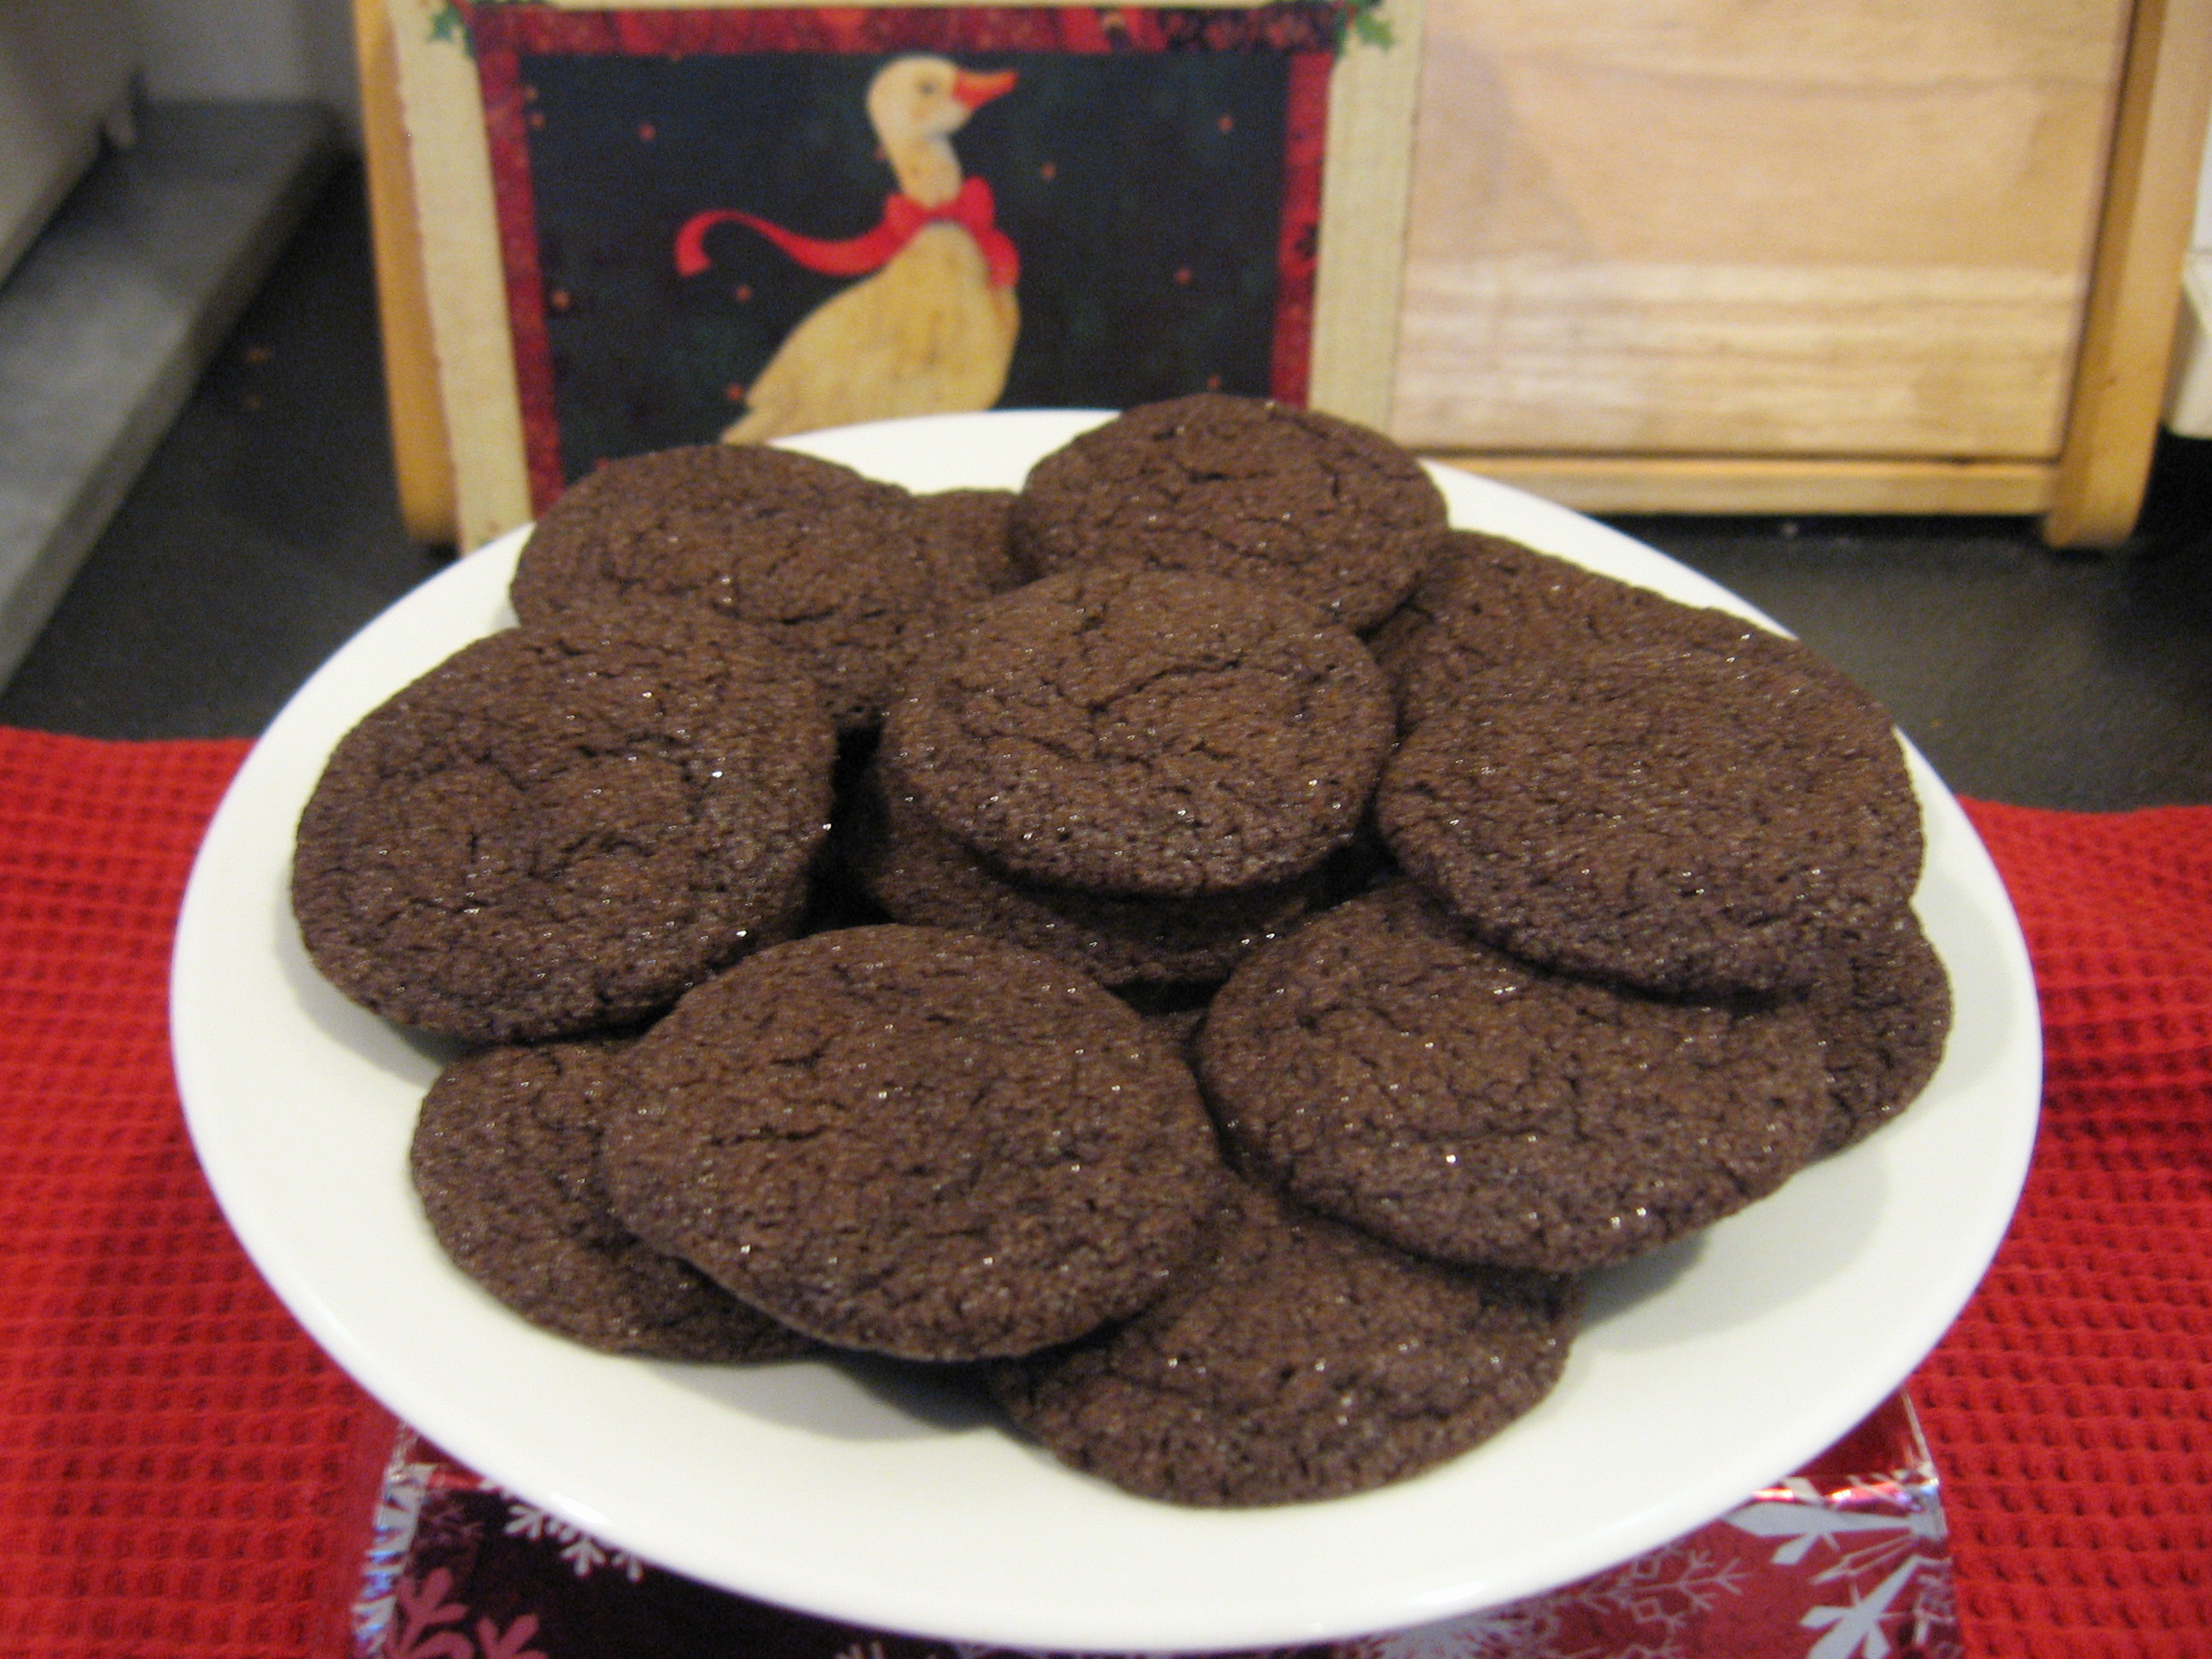 Grammy’s Chocolate Cookies